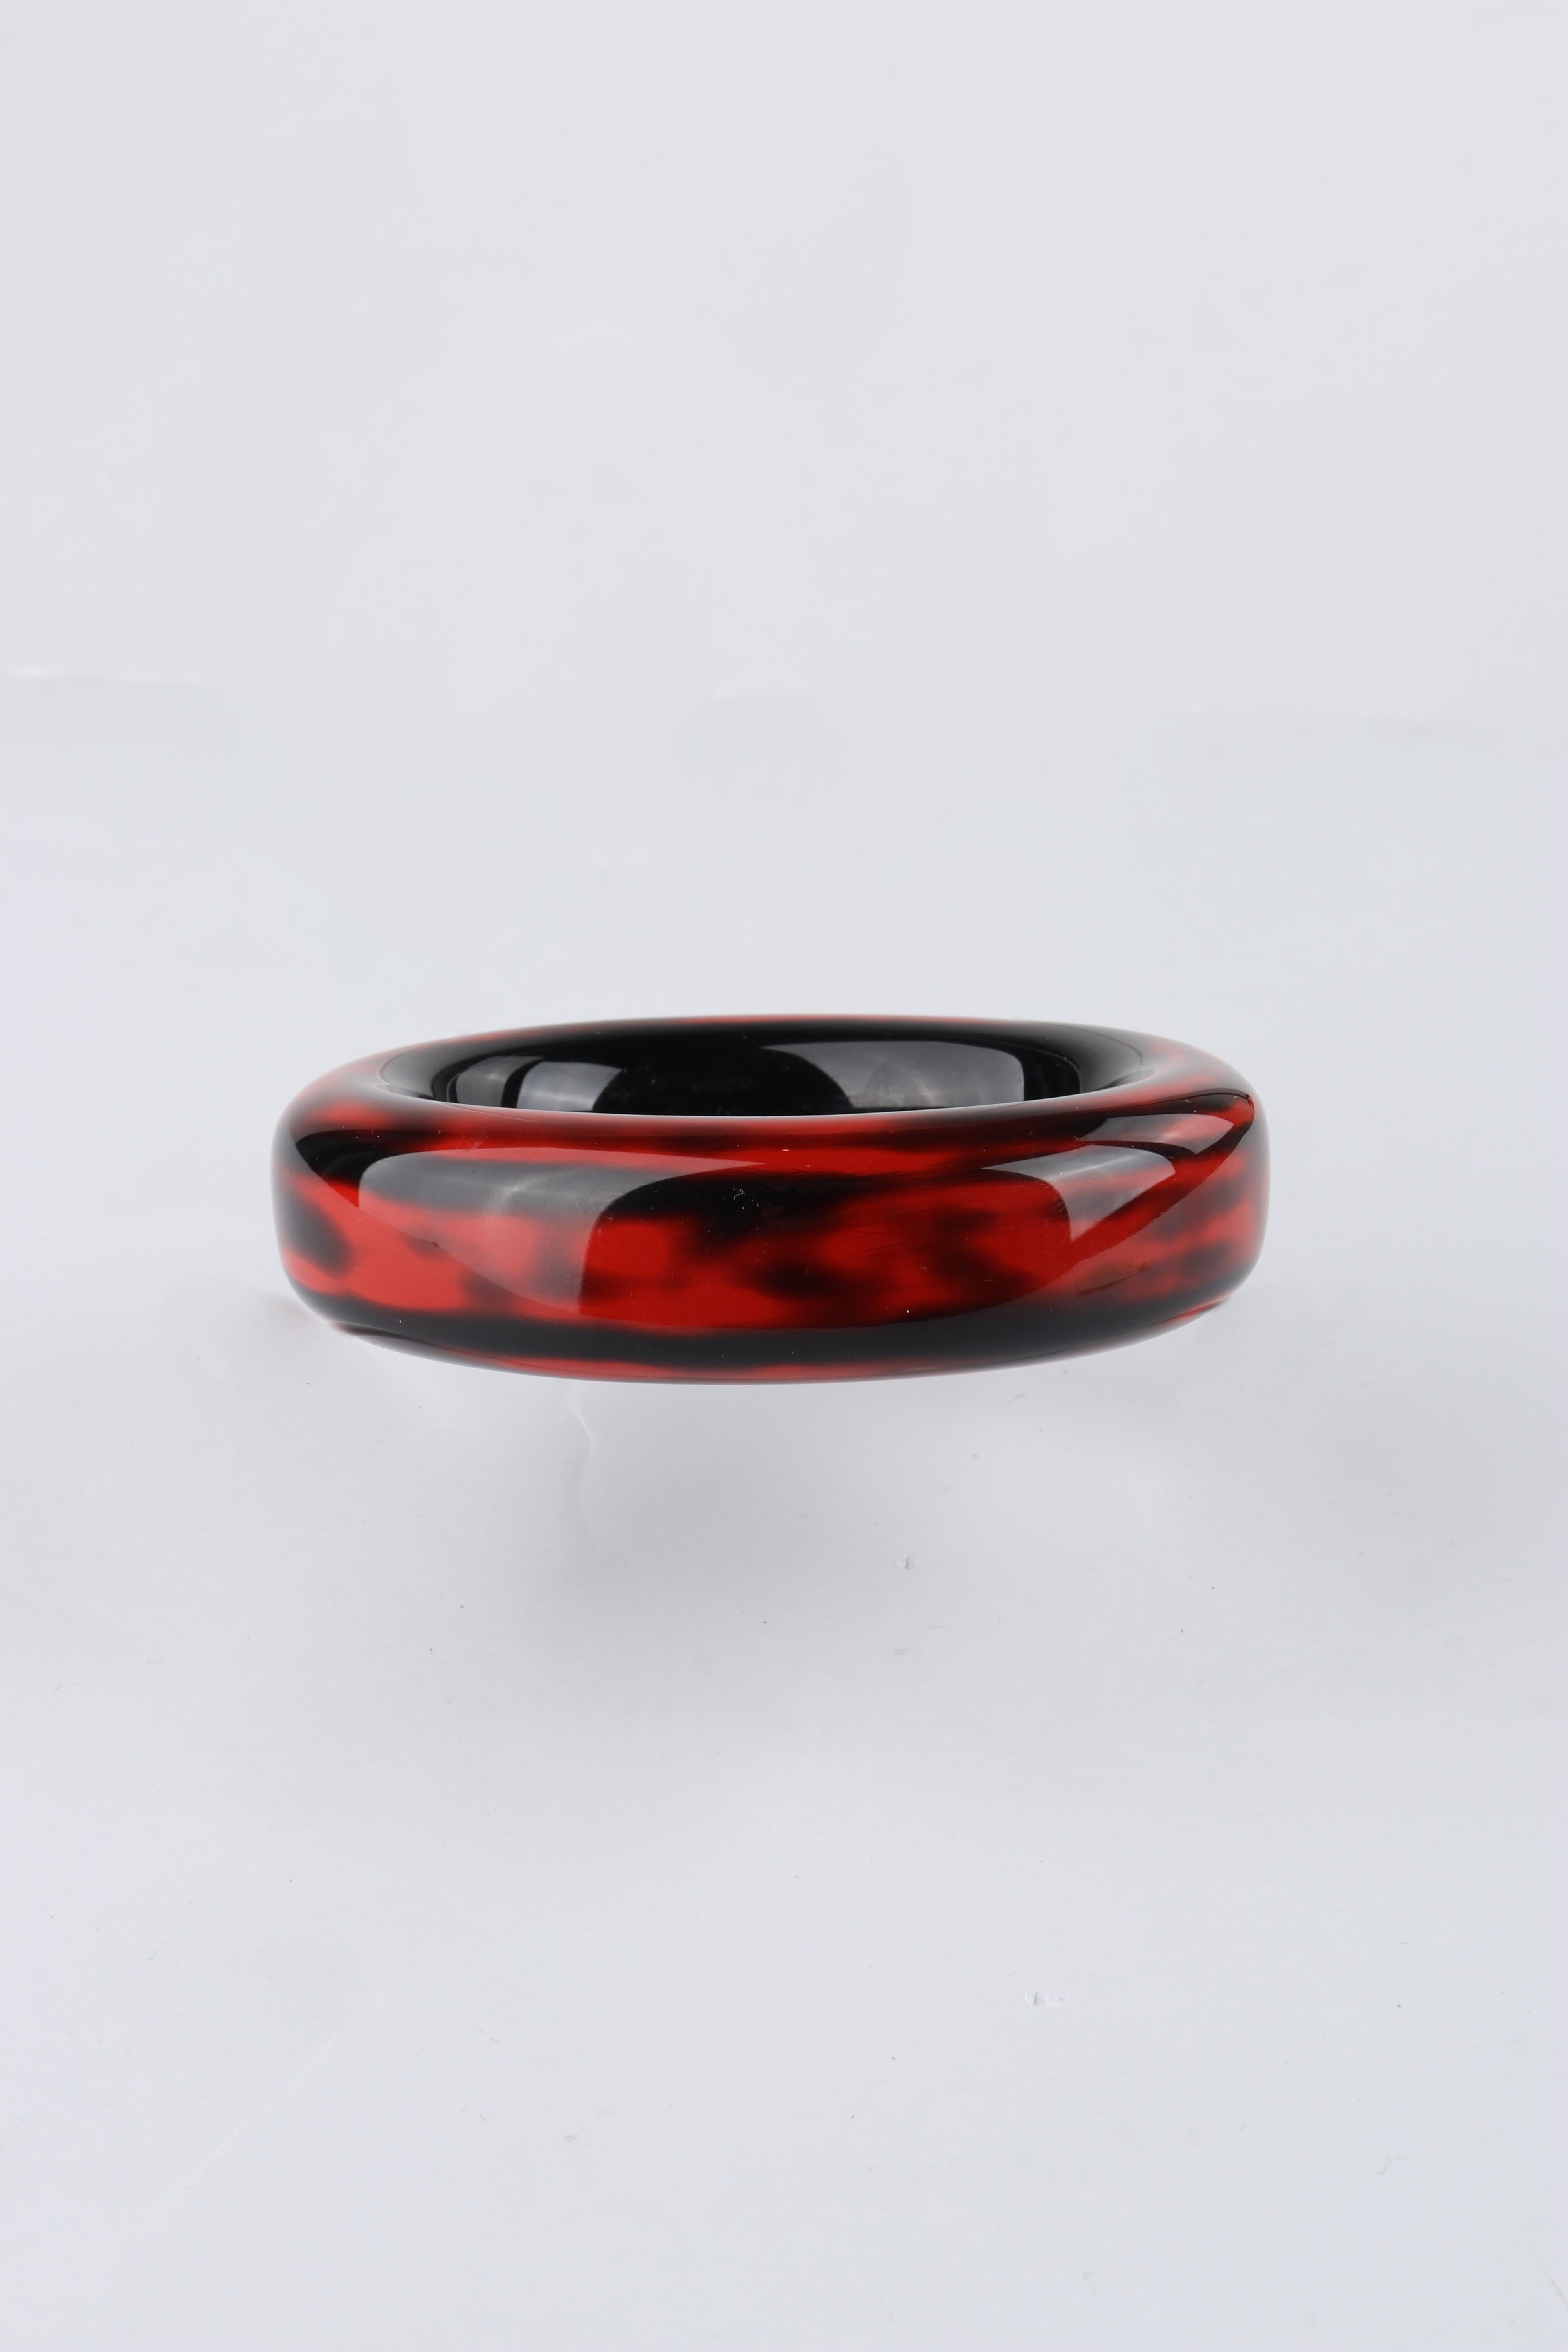 TIFFANY & CO. ELSA PERETTI Black Red Polished Lacquer Hard Wood Bangle Bracelet For Sale 2